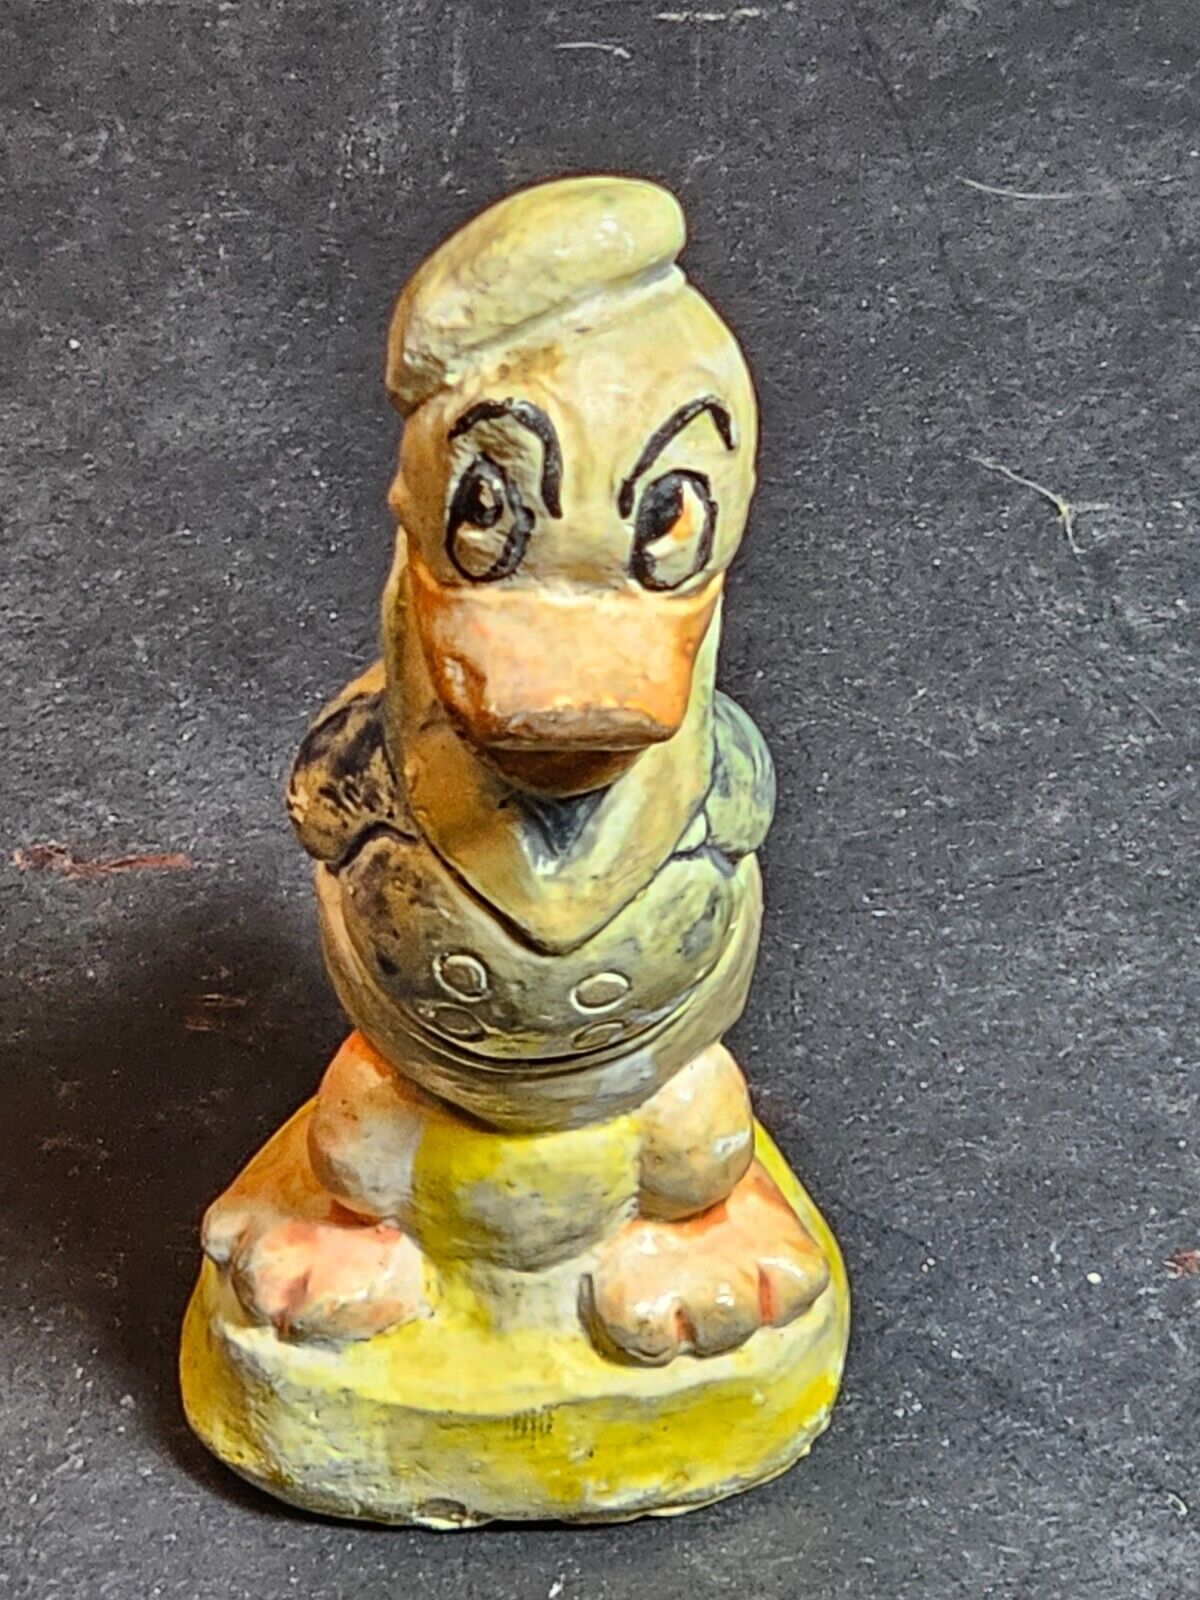 Donald Duck figure chalkware 1930s marked Walt Disney Yellow,Blue and white,